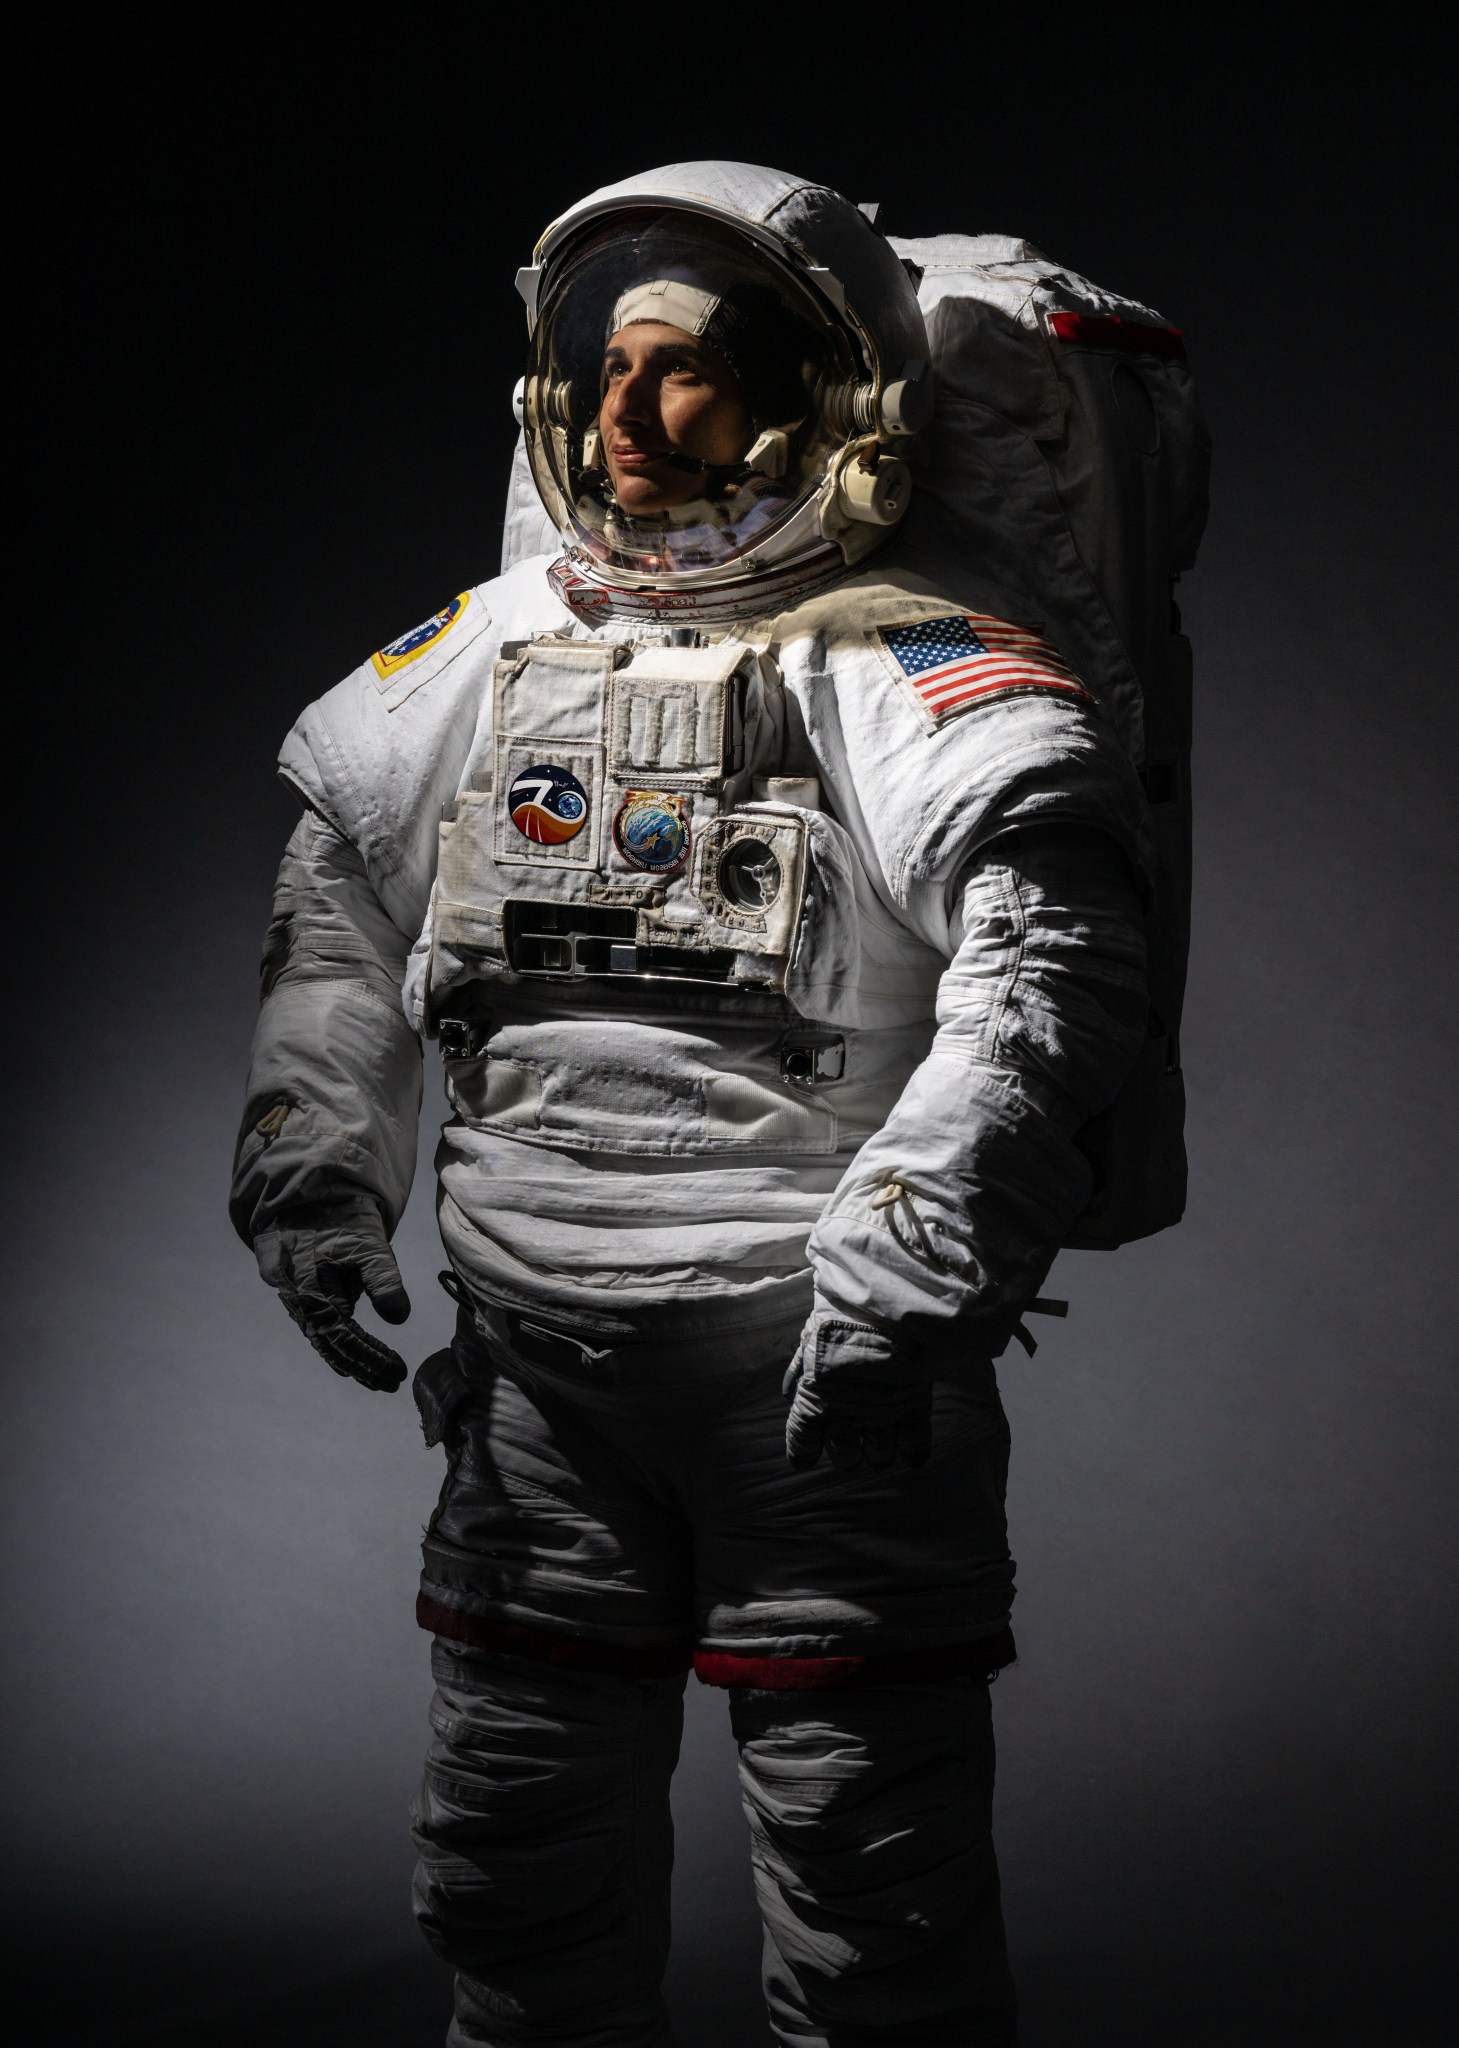 Official portrait of NASA astronaut Jasmin Moghbeli in a spacesuit.